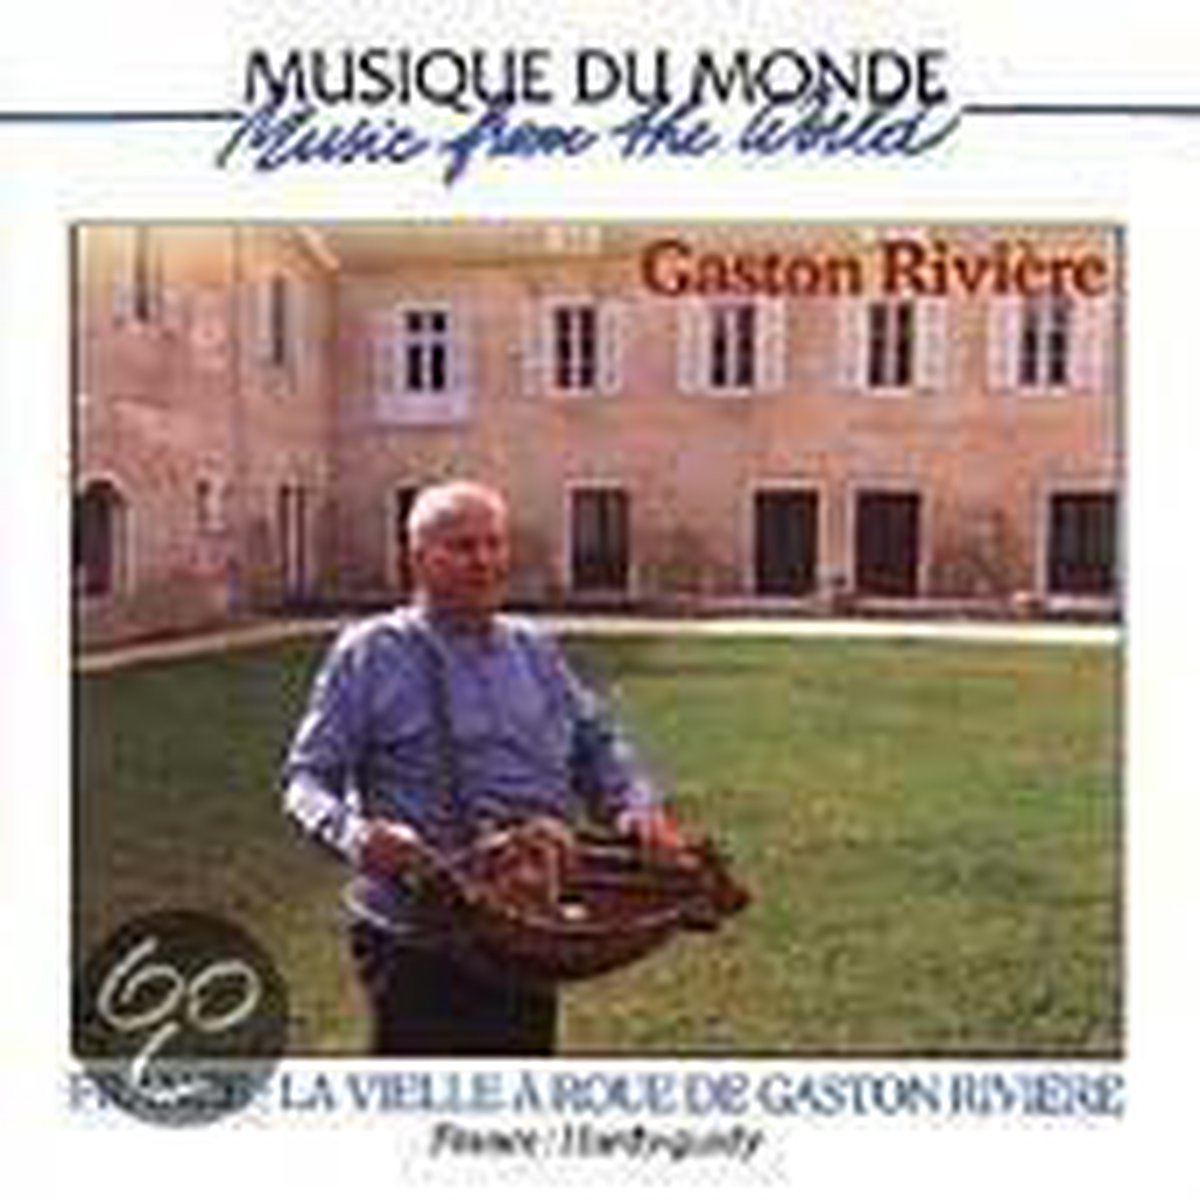 France:The Hurdy Gurdy - Gaston Riviere